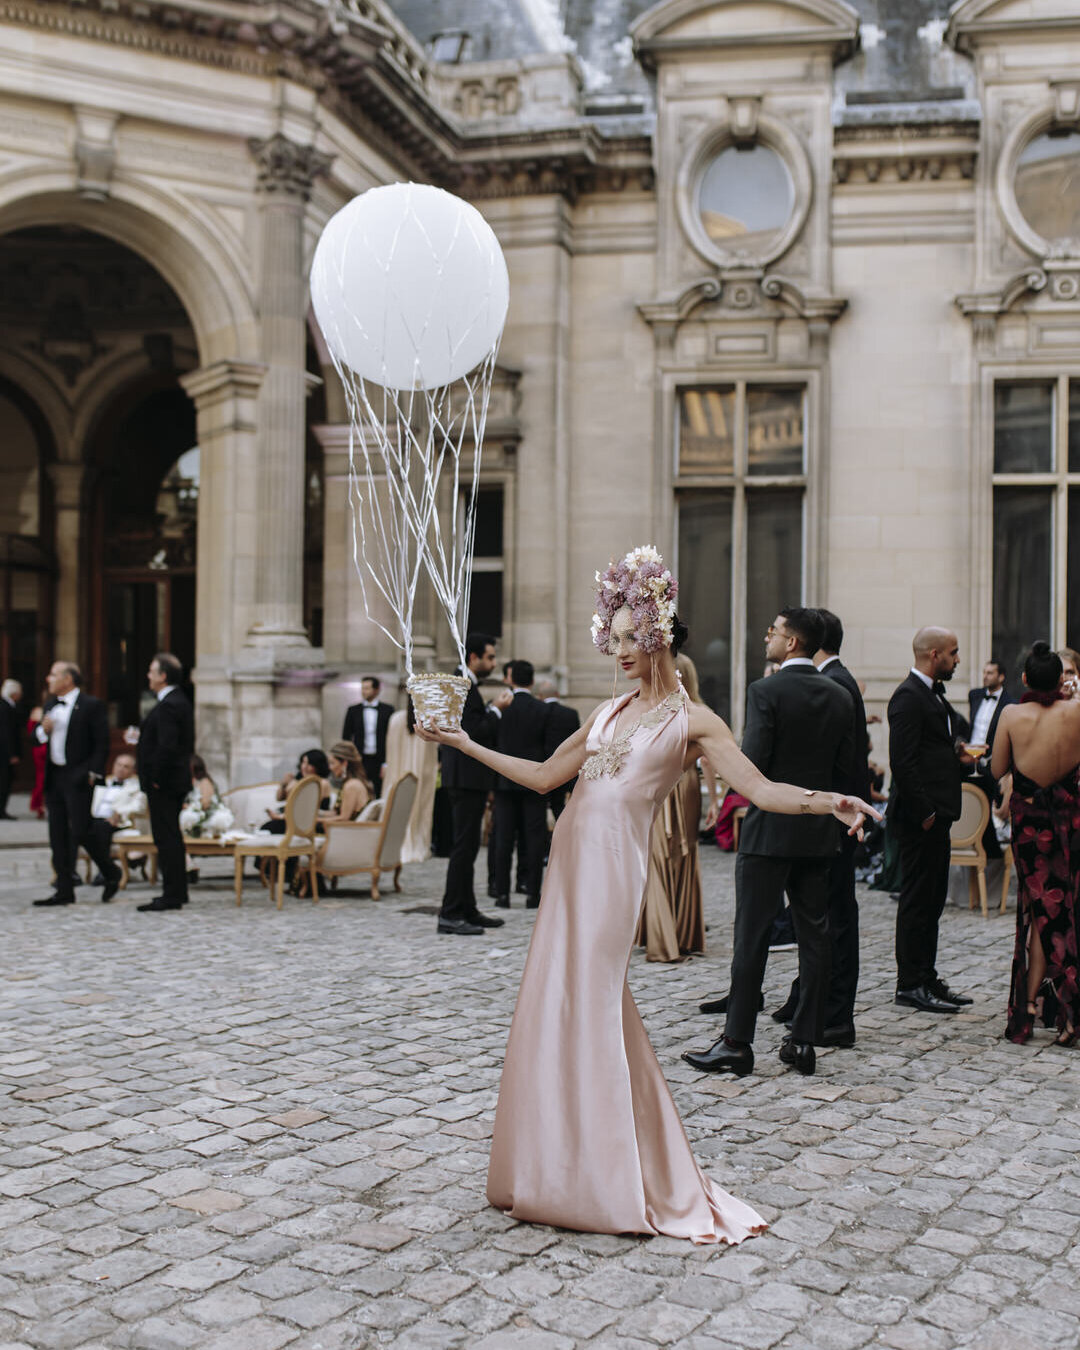 Paris Destination Wedding at Chateau de Chantilly by Alejandra Poupel Events artist pink dress white balloon